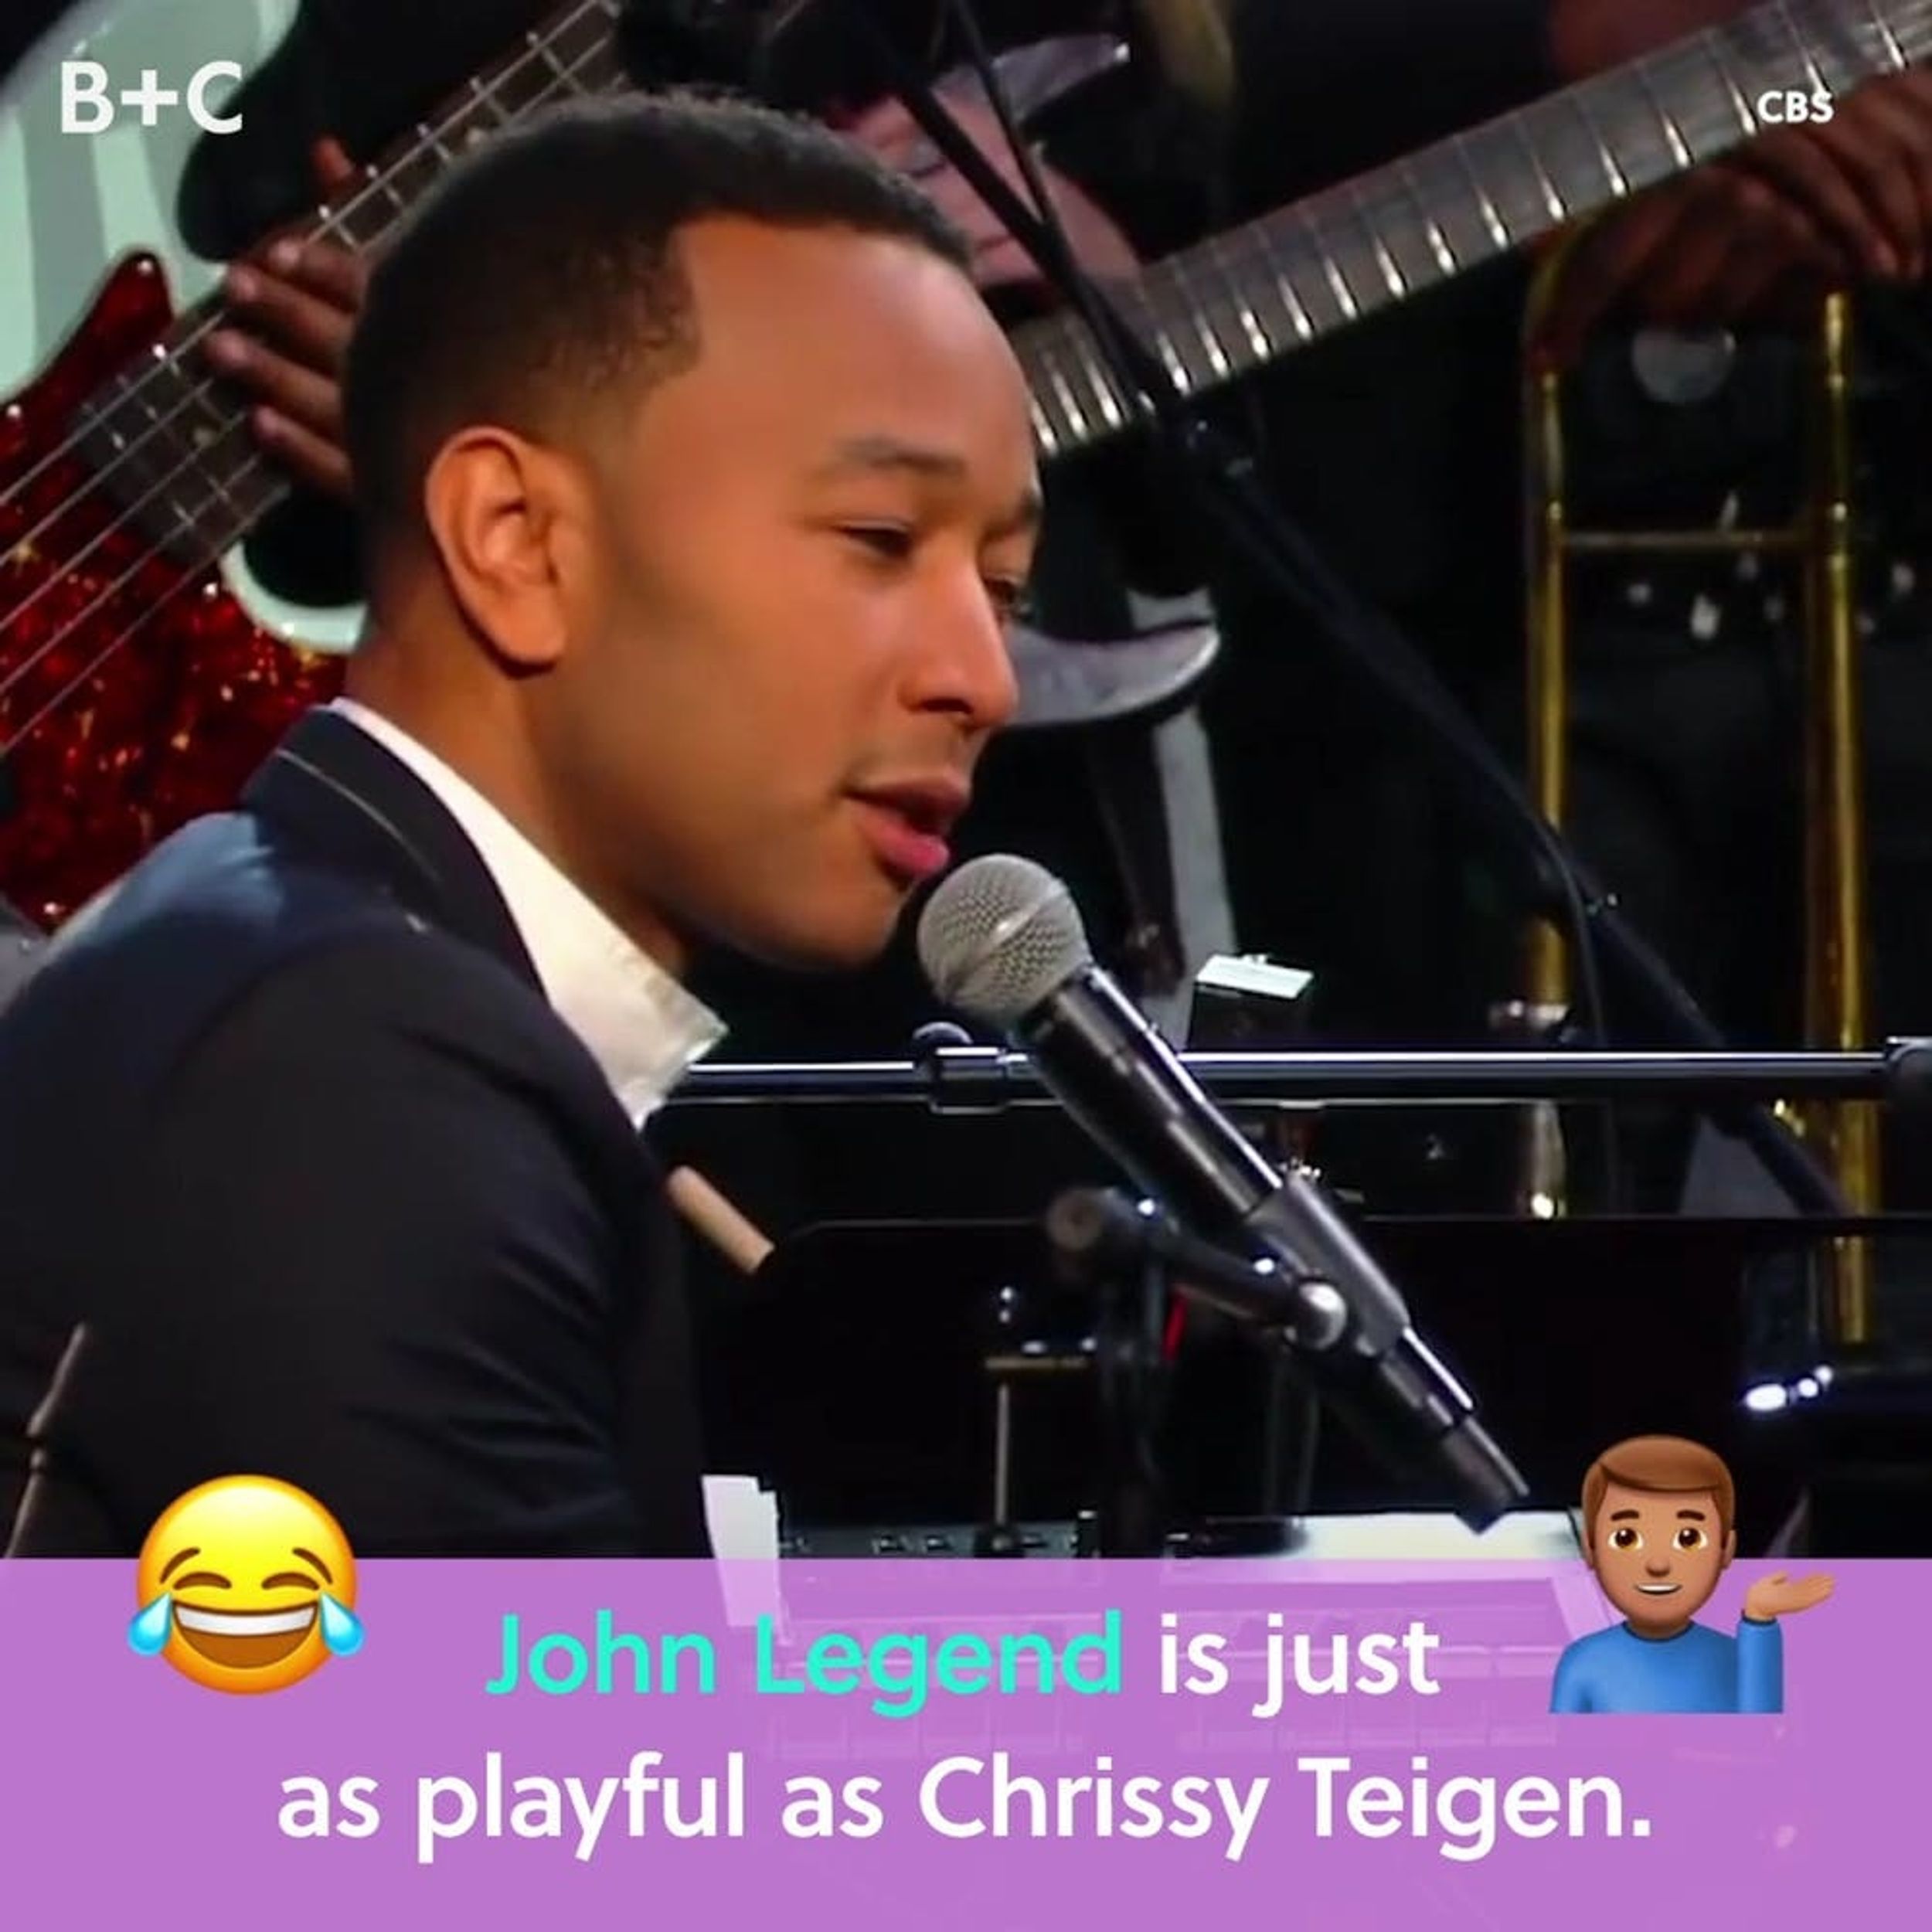 John Legend Is Just as Playful as Chrissy Teigen